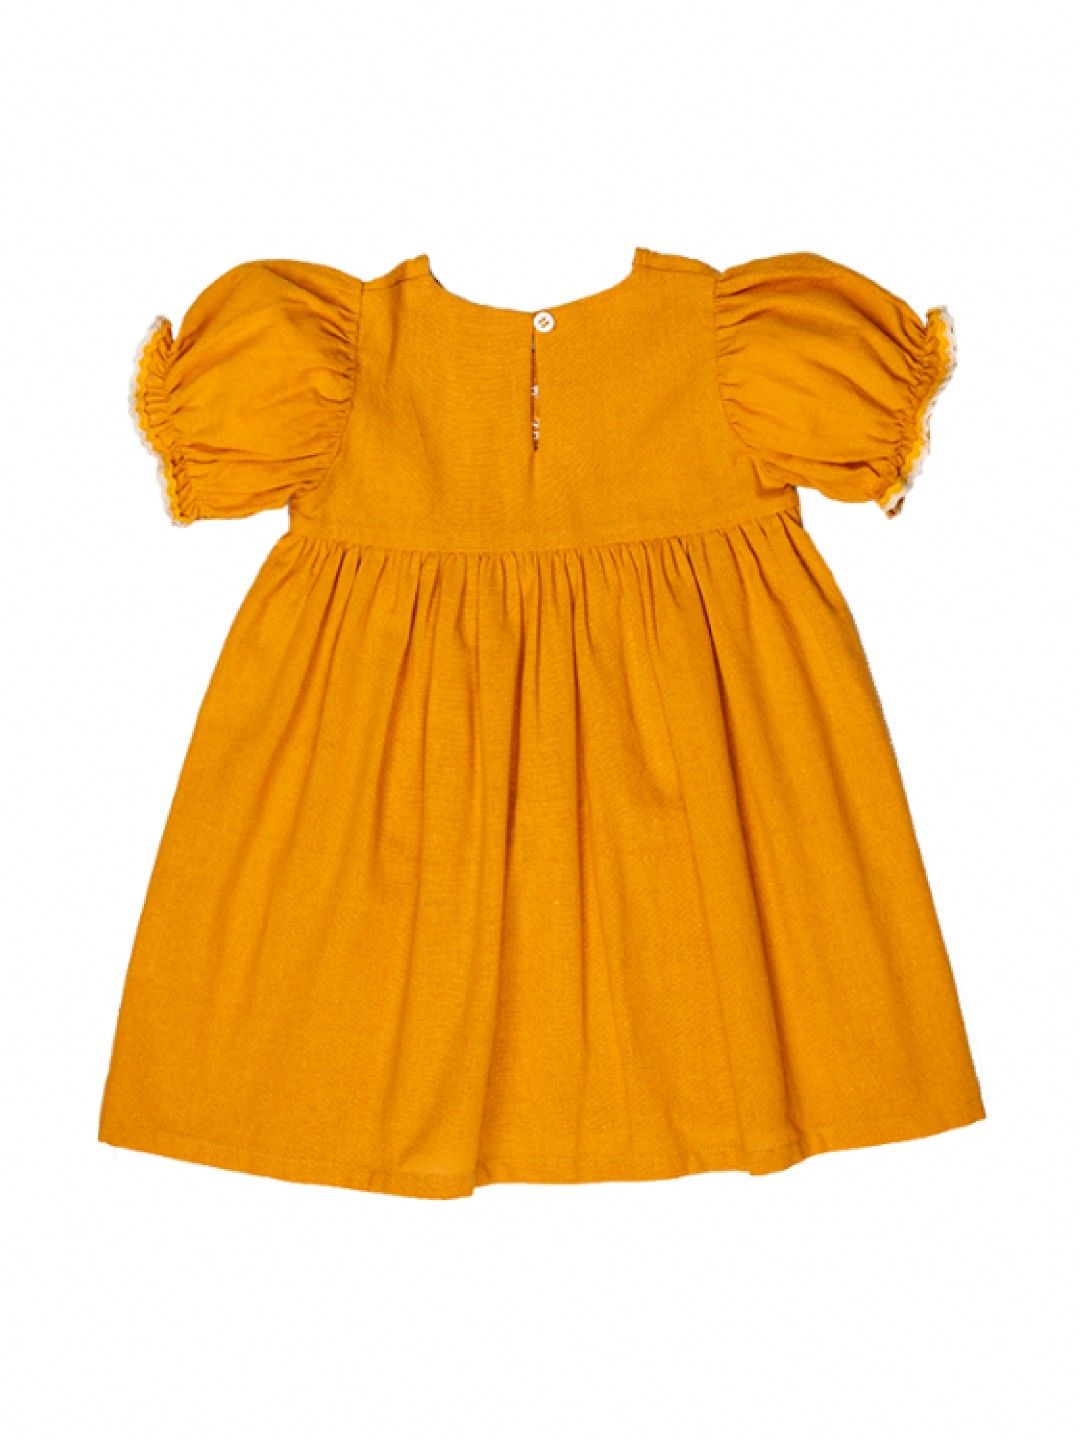 bean fashion Floral Flair Mela Ricrac Puff Sleeve Embroidered Dress (Yellow- Image 2)